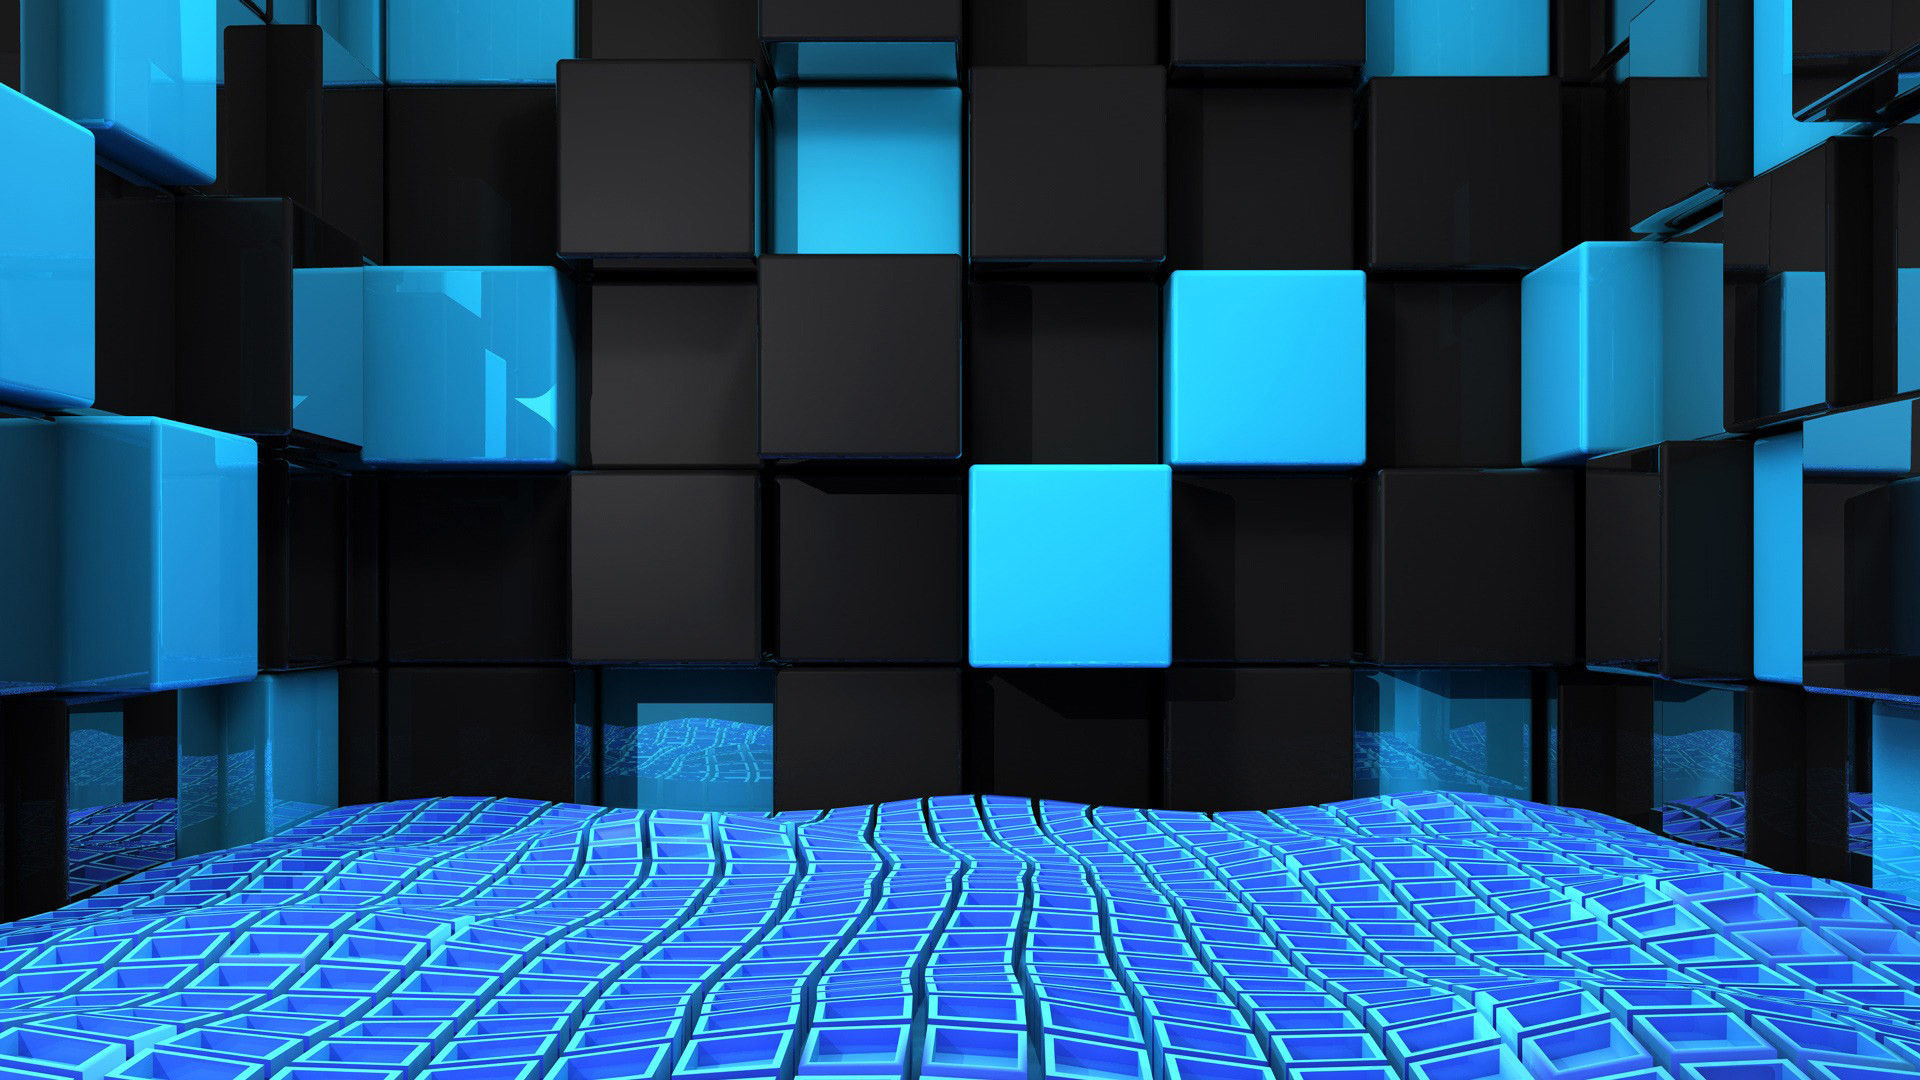 3D Blue and Black Cubes Desktop Background HD 19201080 Desktop Backgrounds Pinterest Wallpaper, Desktop backgrounds and Hd wallpaper